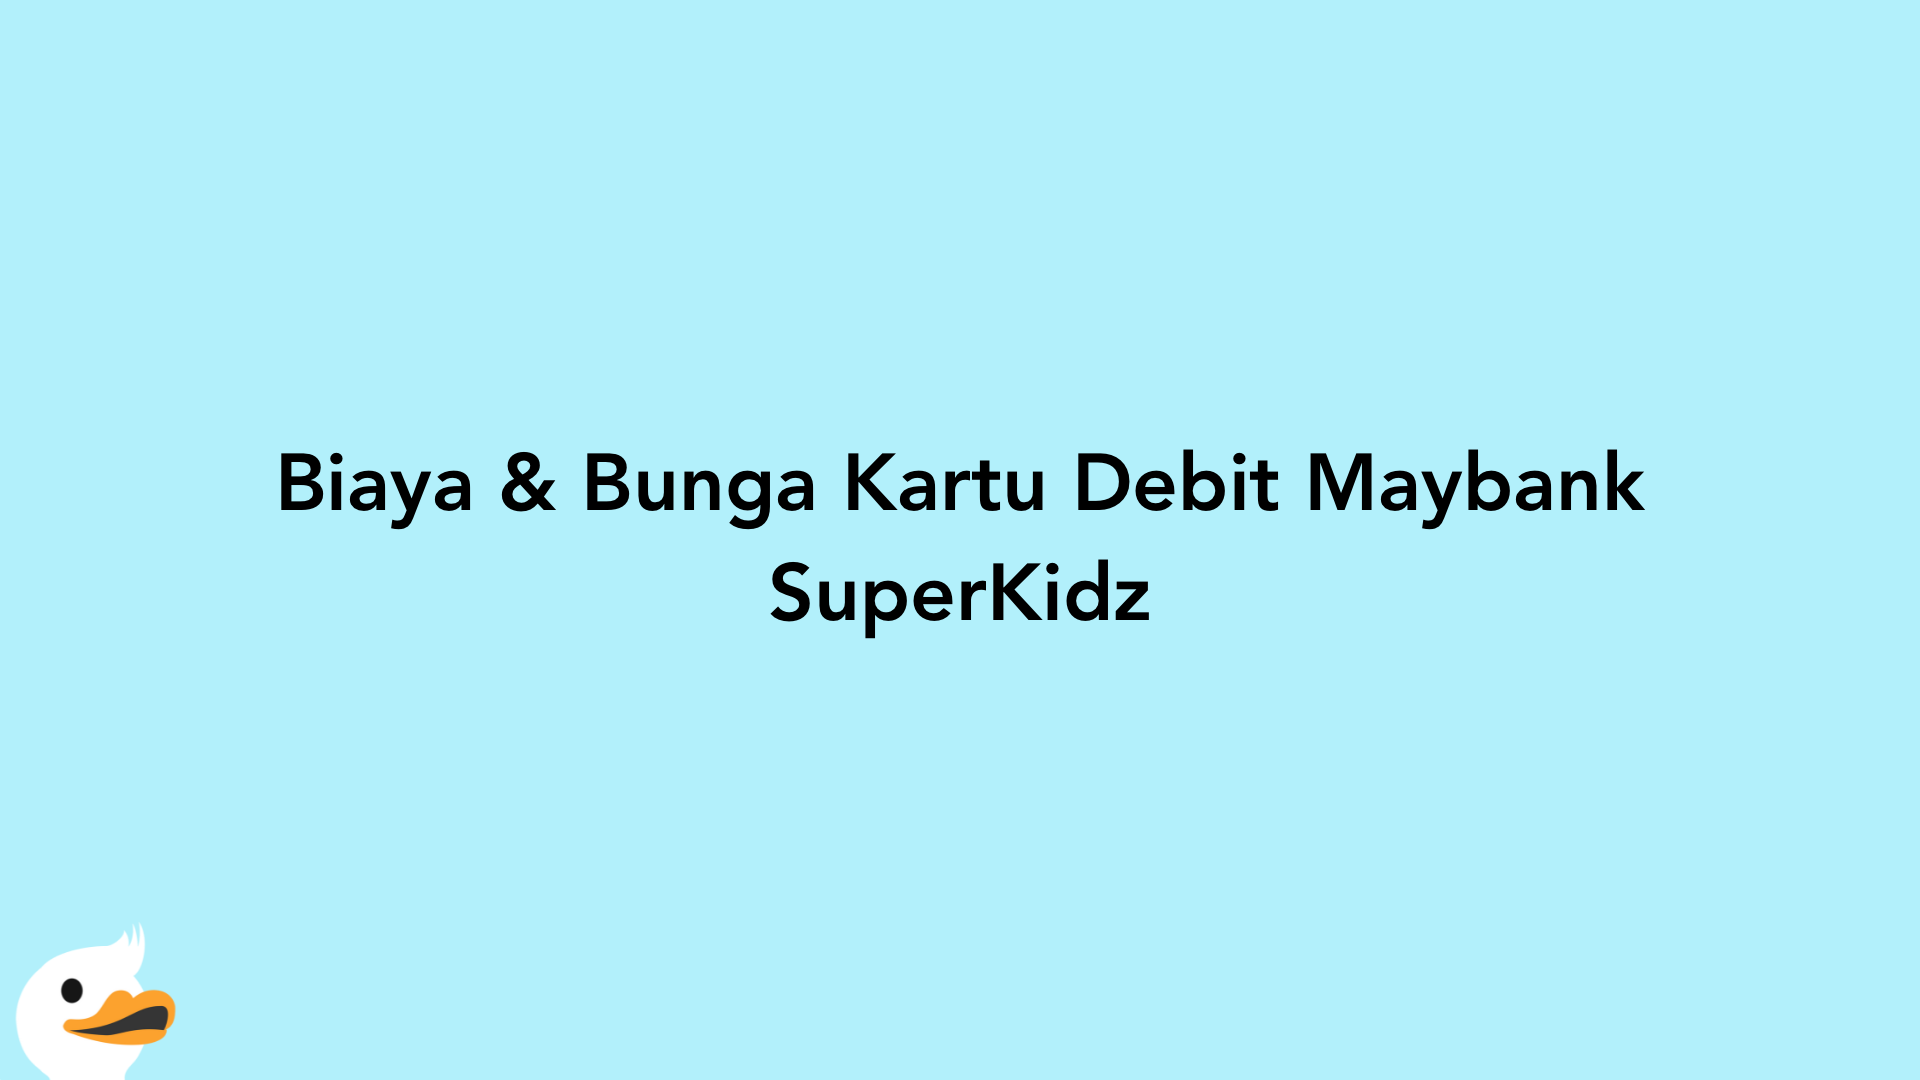 Biaya & Bunga Kartu Debit Maybank SuperKidz